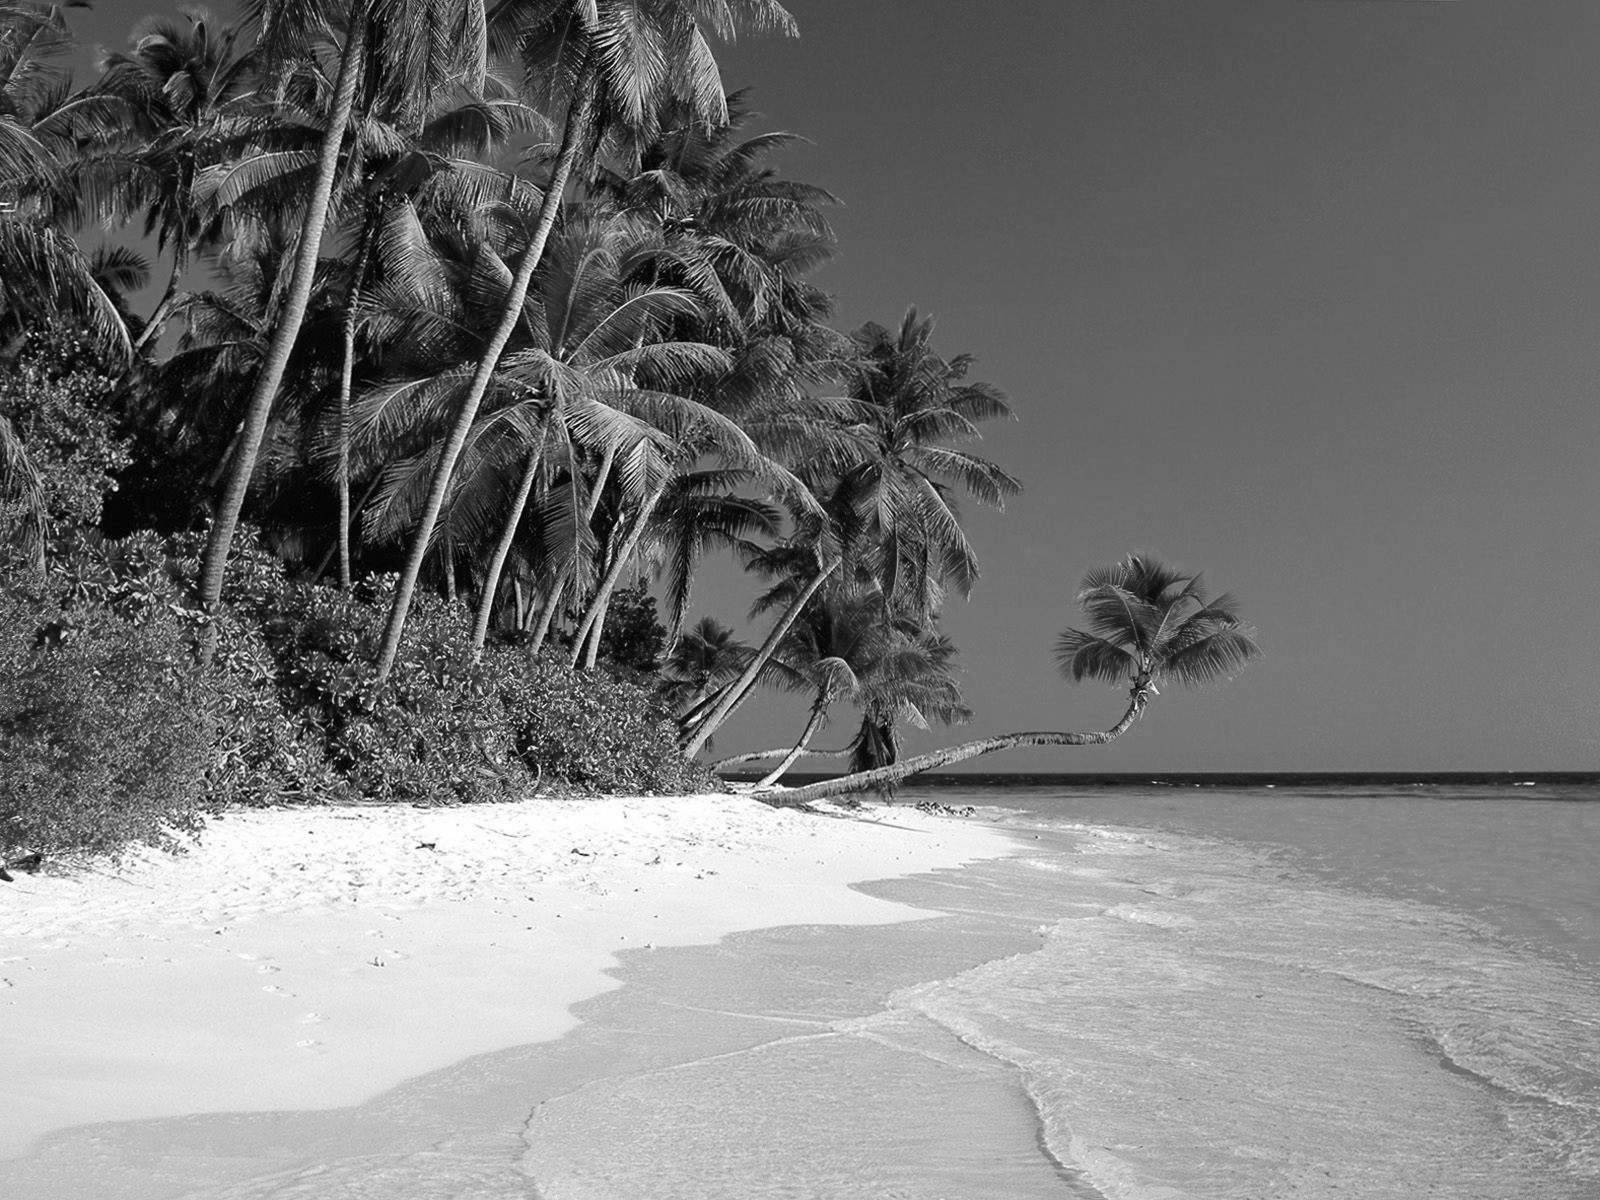 http://1.bp.blogspot.com/-oGyj1vE31XE/UMTz7iI58lI/AAAAAAAABuY/qWB0xMWI4yU/s1600/Black+and+White+Beach+Landscape+Wallpaper+HD+%25282%2529.jpg